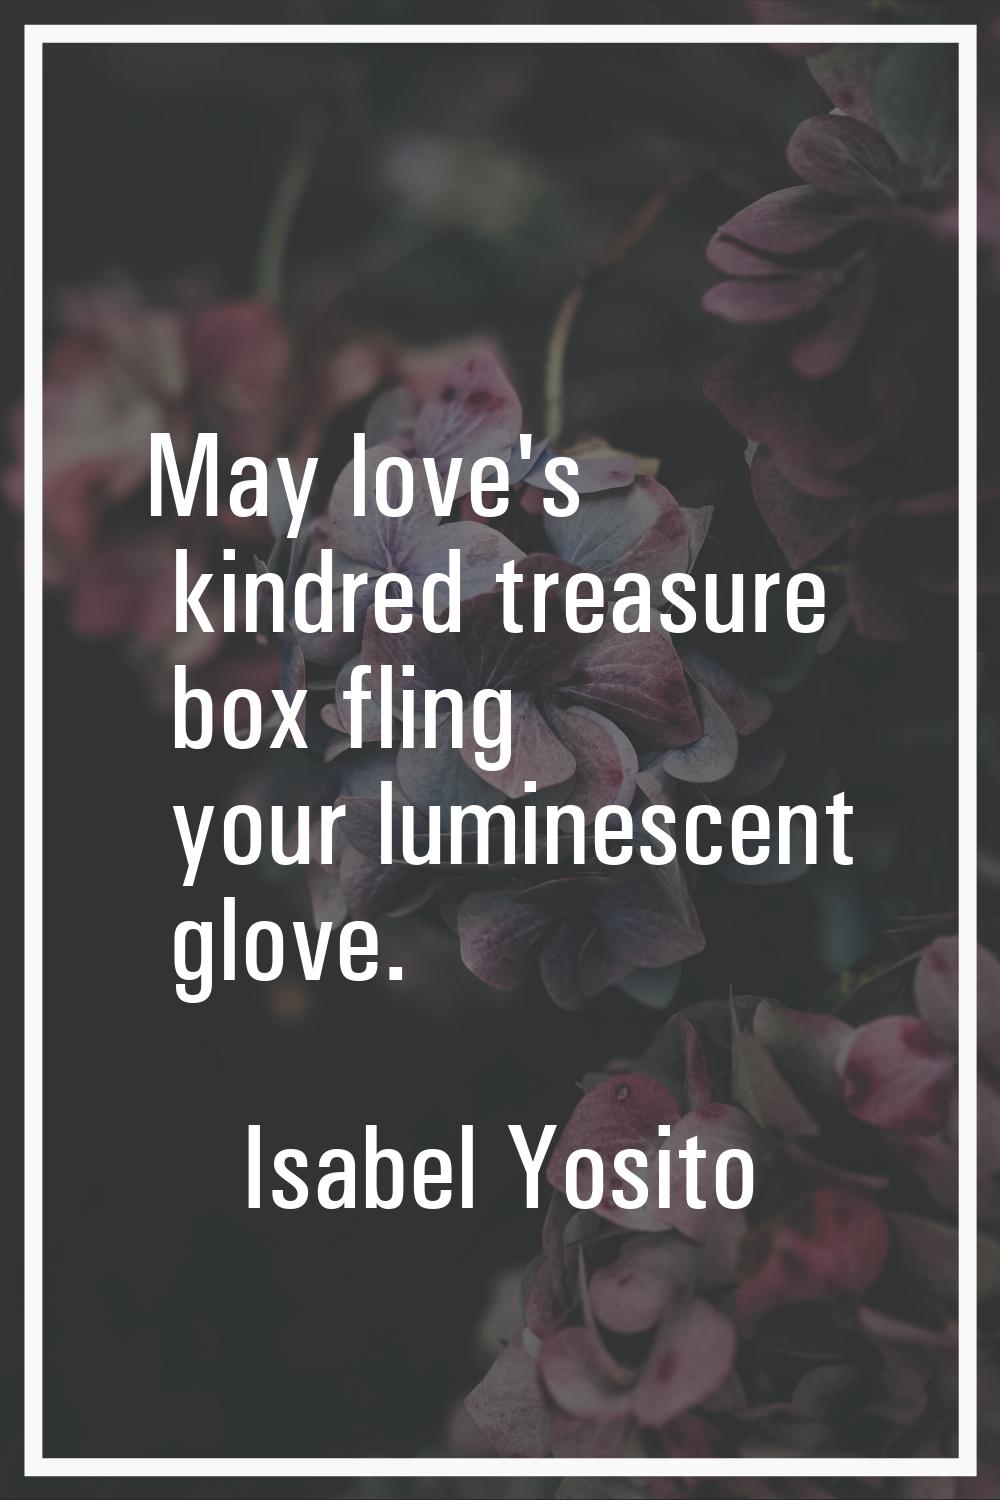 May love's kindred treasure box fling your luminescent glove.